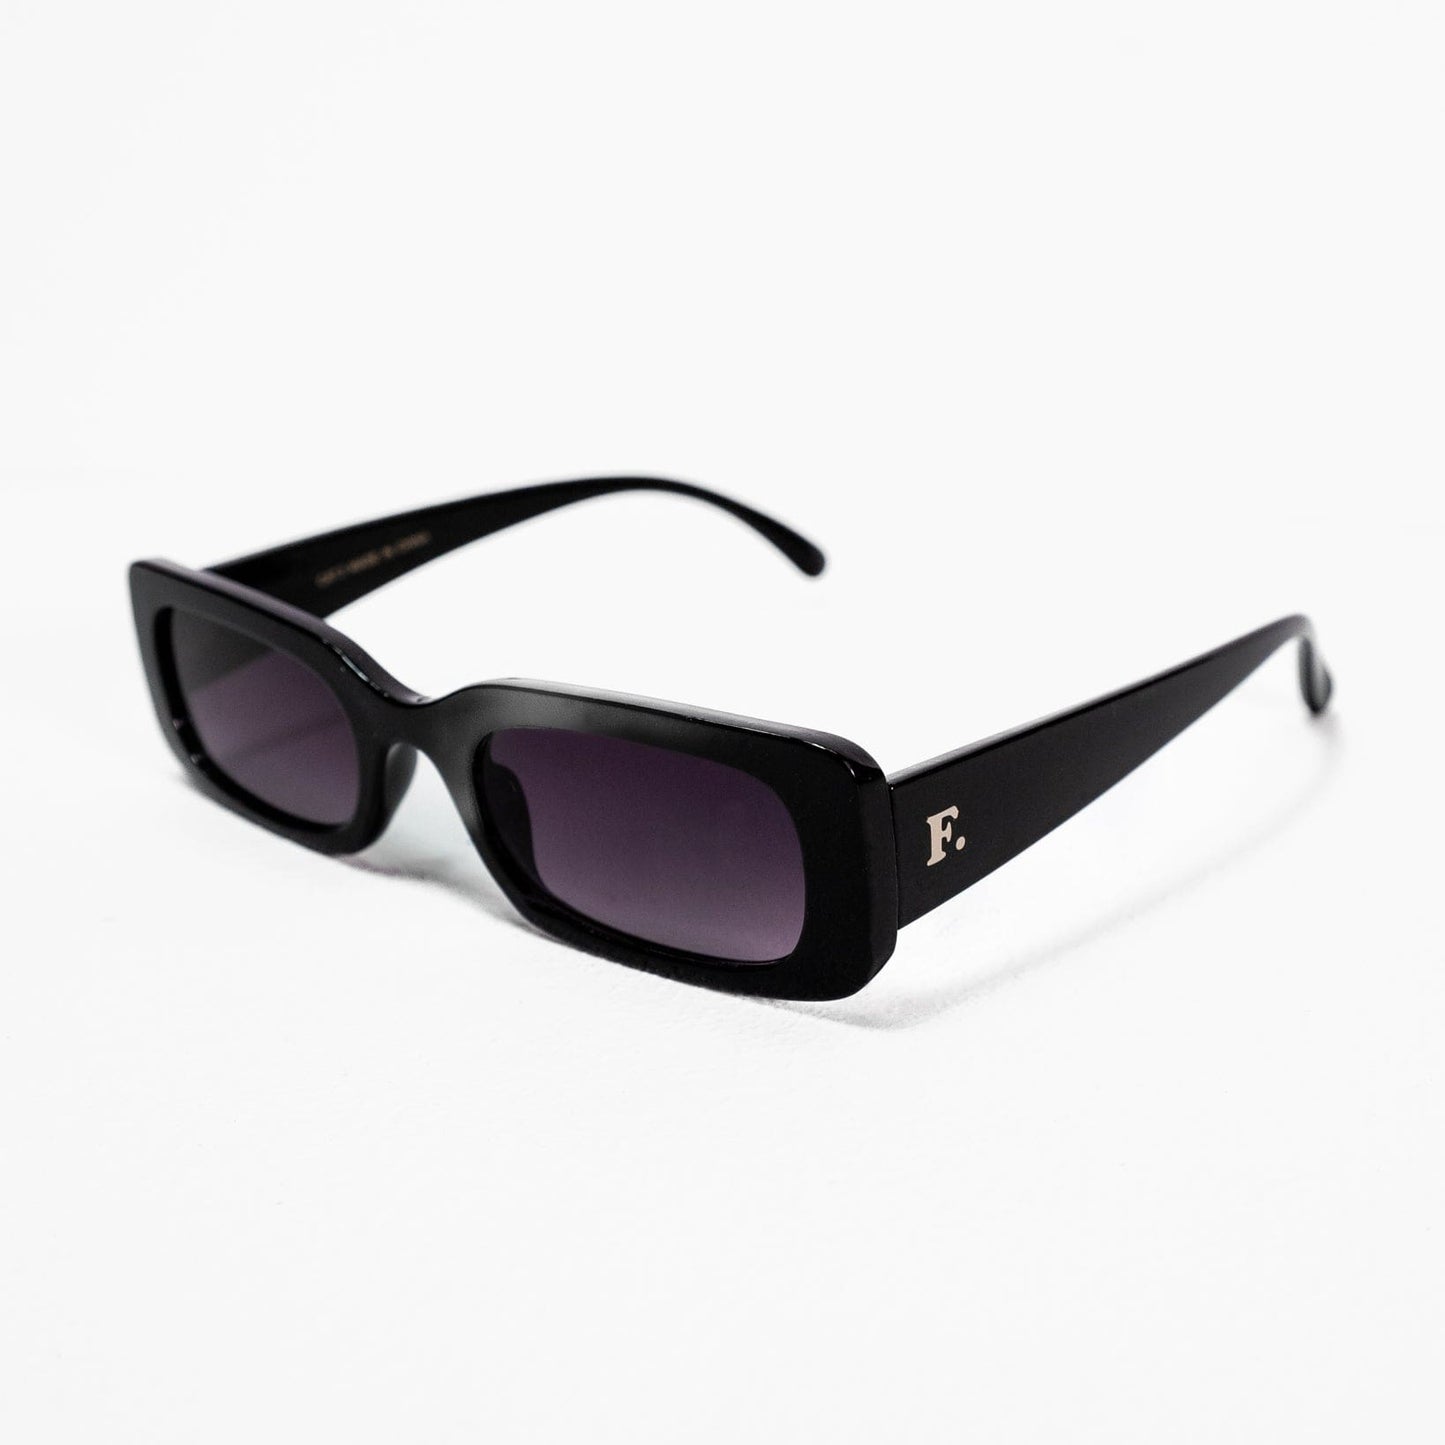 Miami Sunglasses Black Sunglasses Frothies